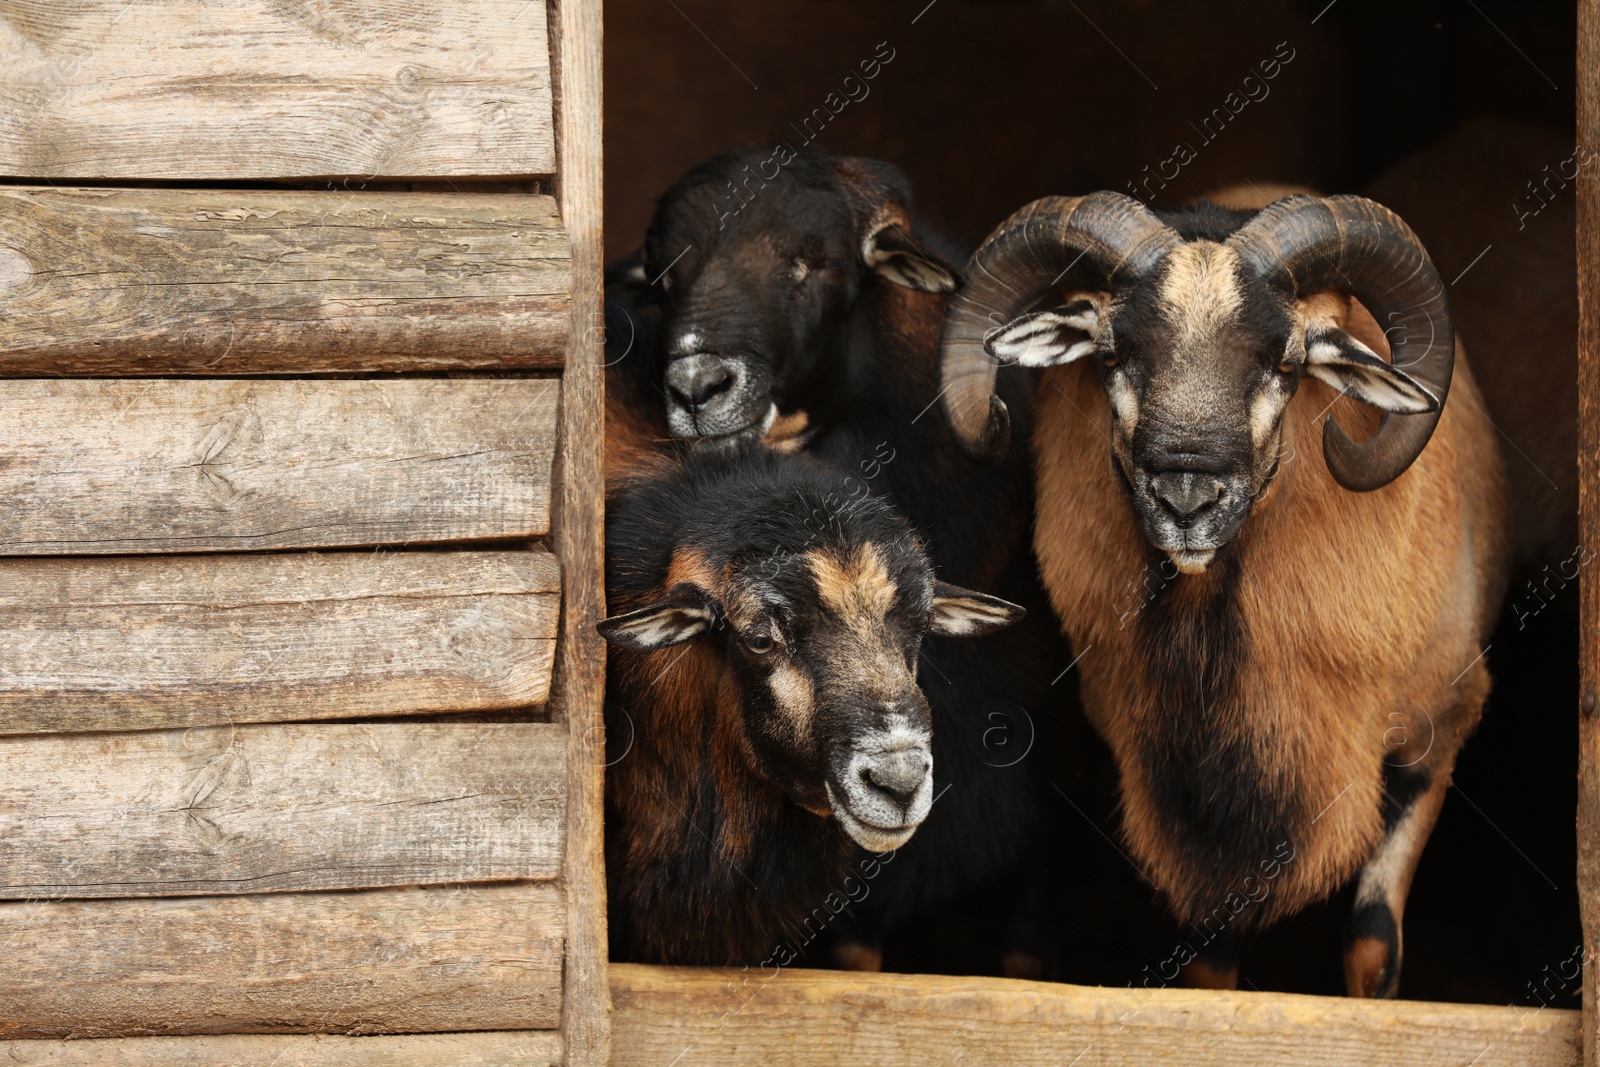 Photo of Beautiful ram and sheep in zoo enclosure